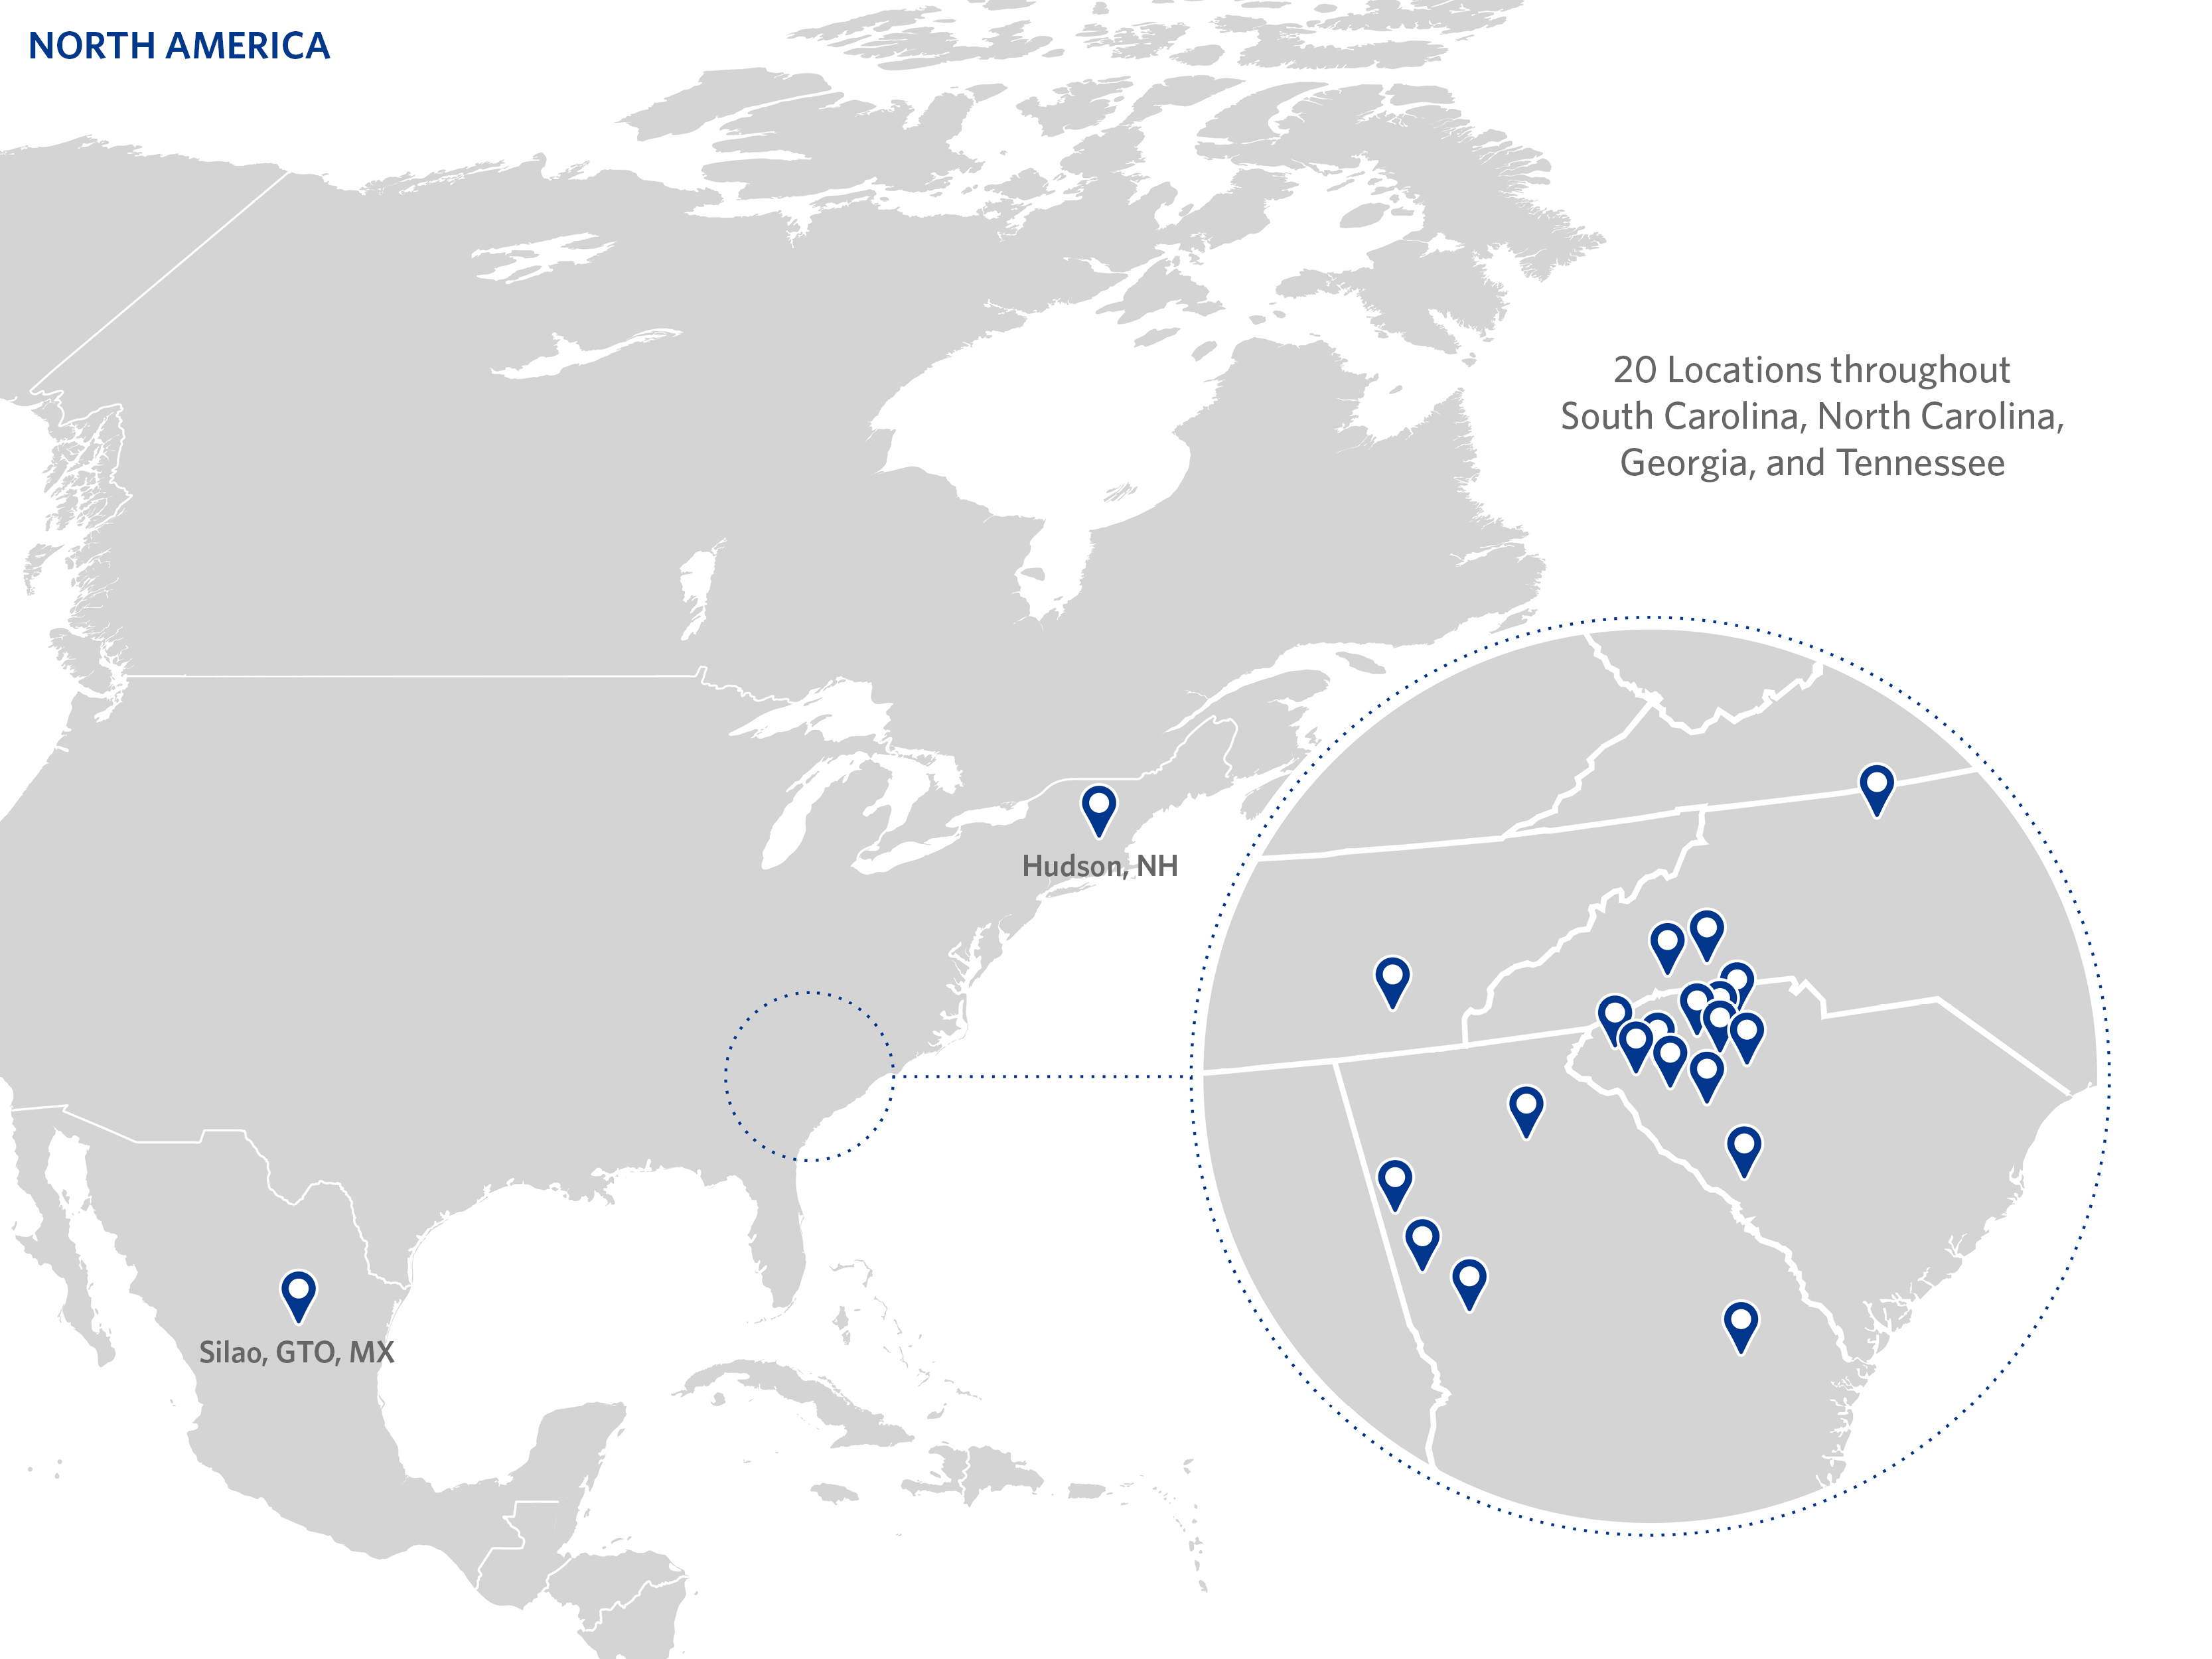 North America Locations